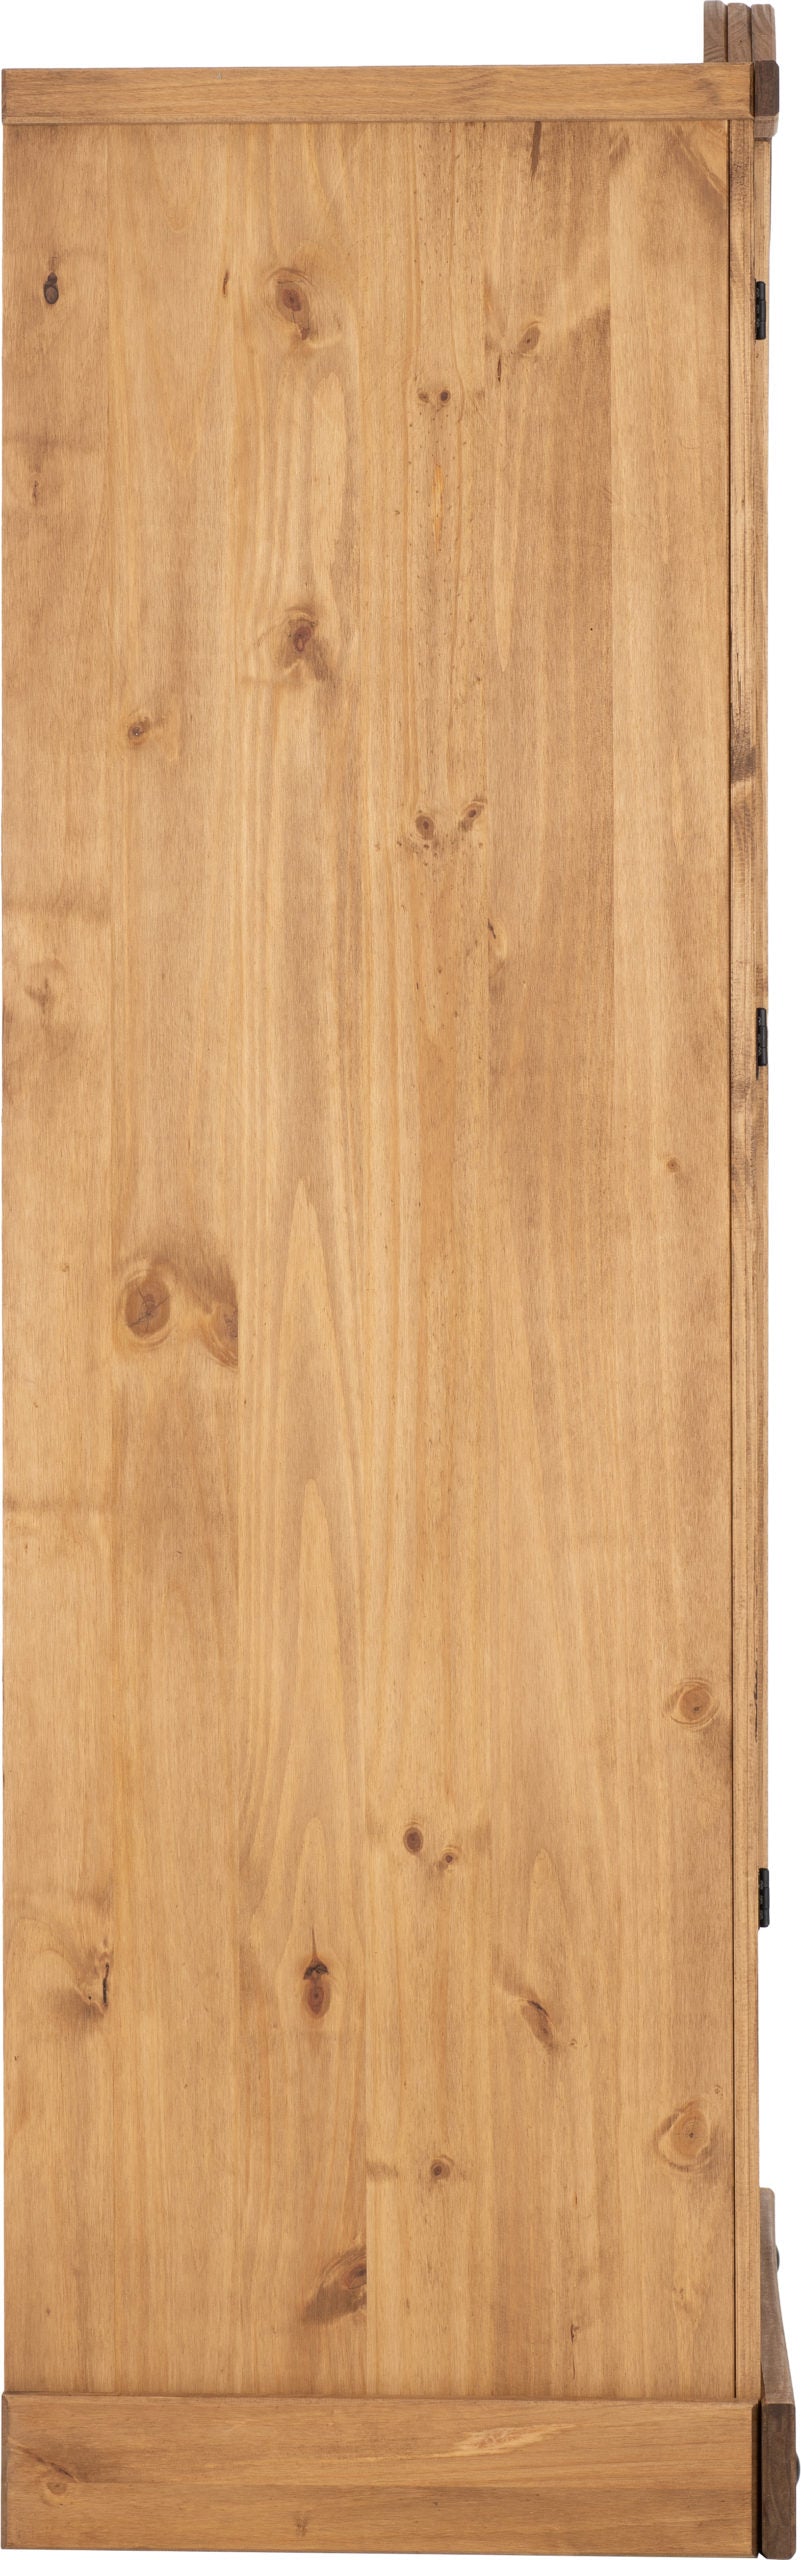 Corona 2 Door 1 Drawer Wardrobe- Distressed Waxed Pine